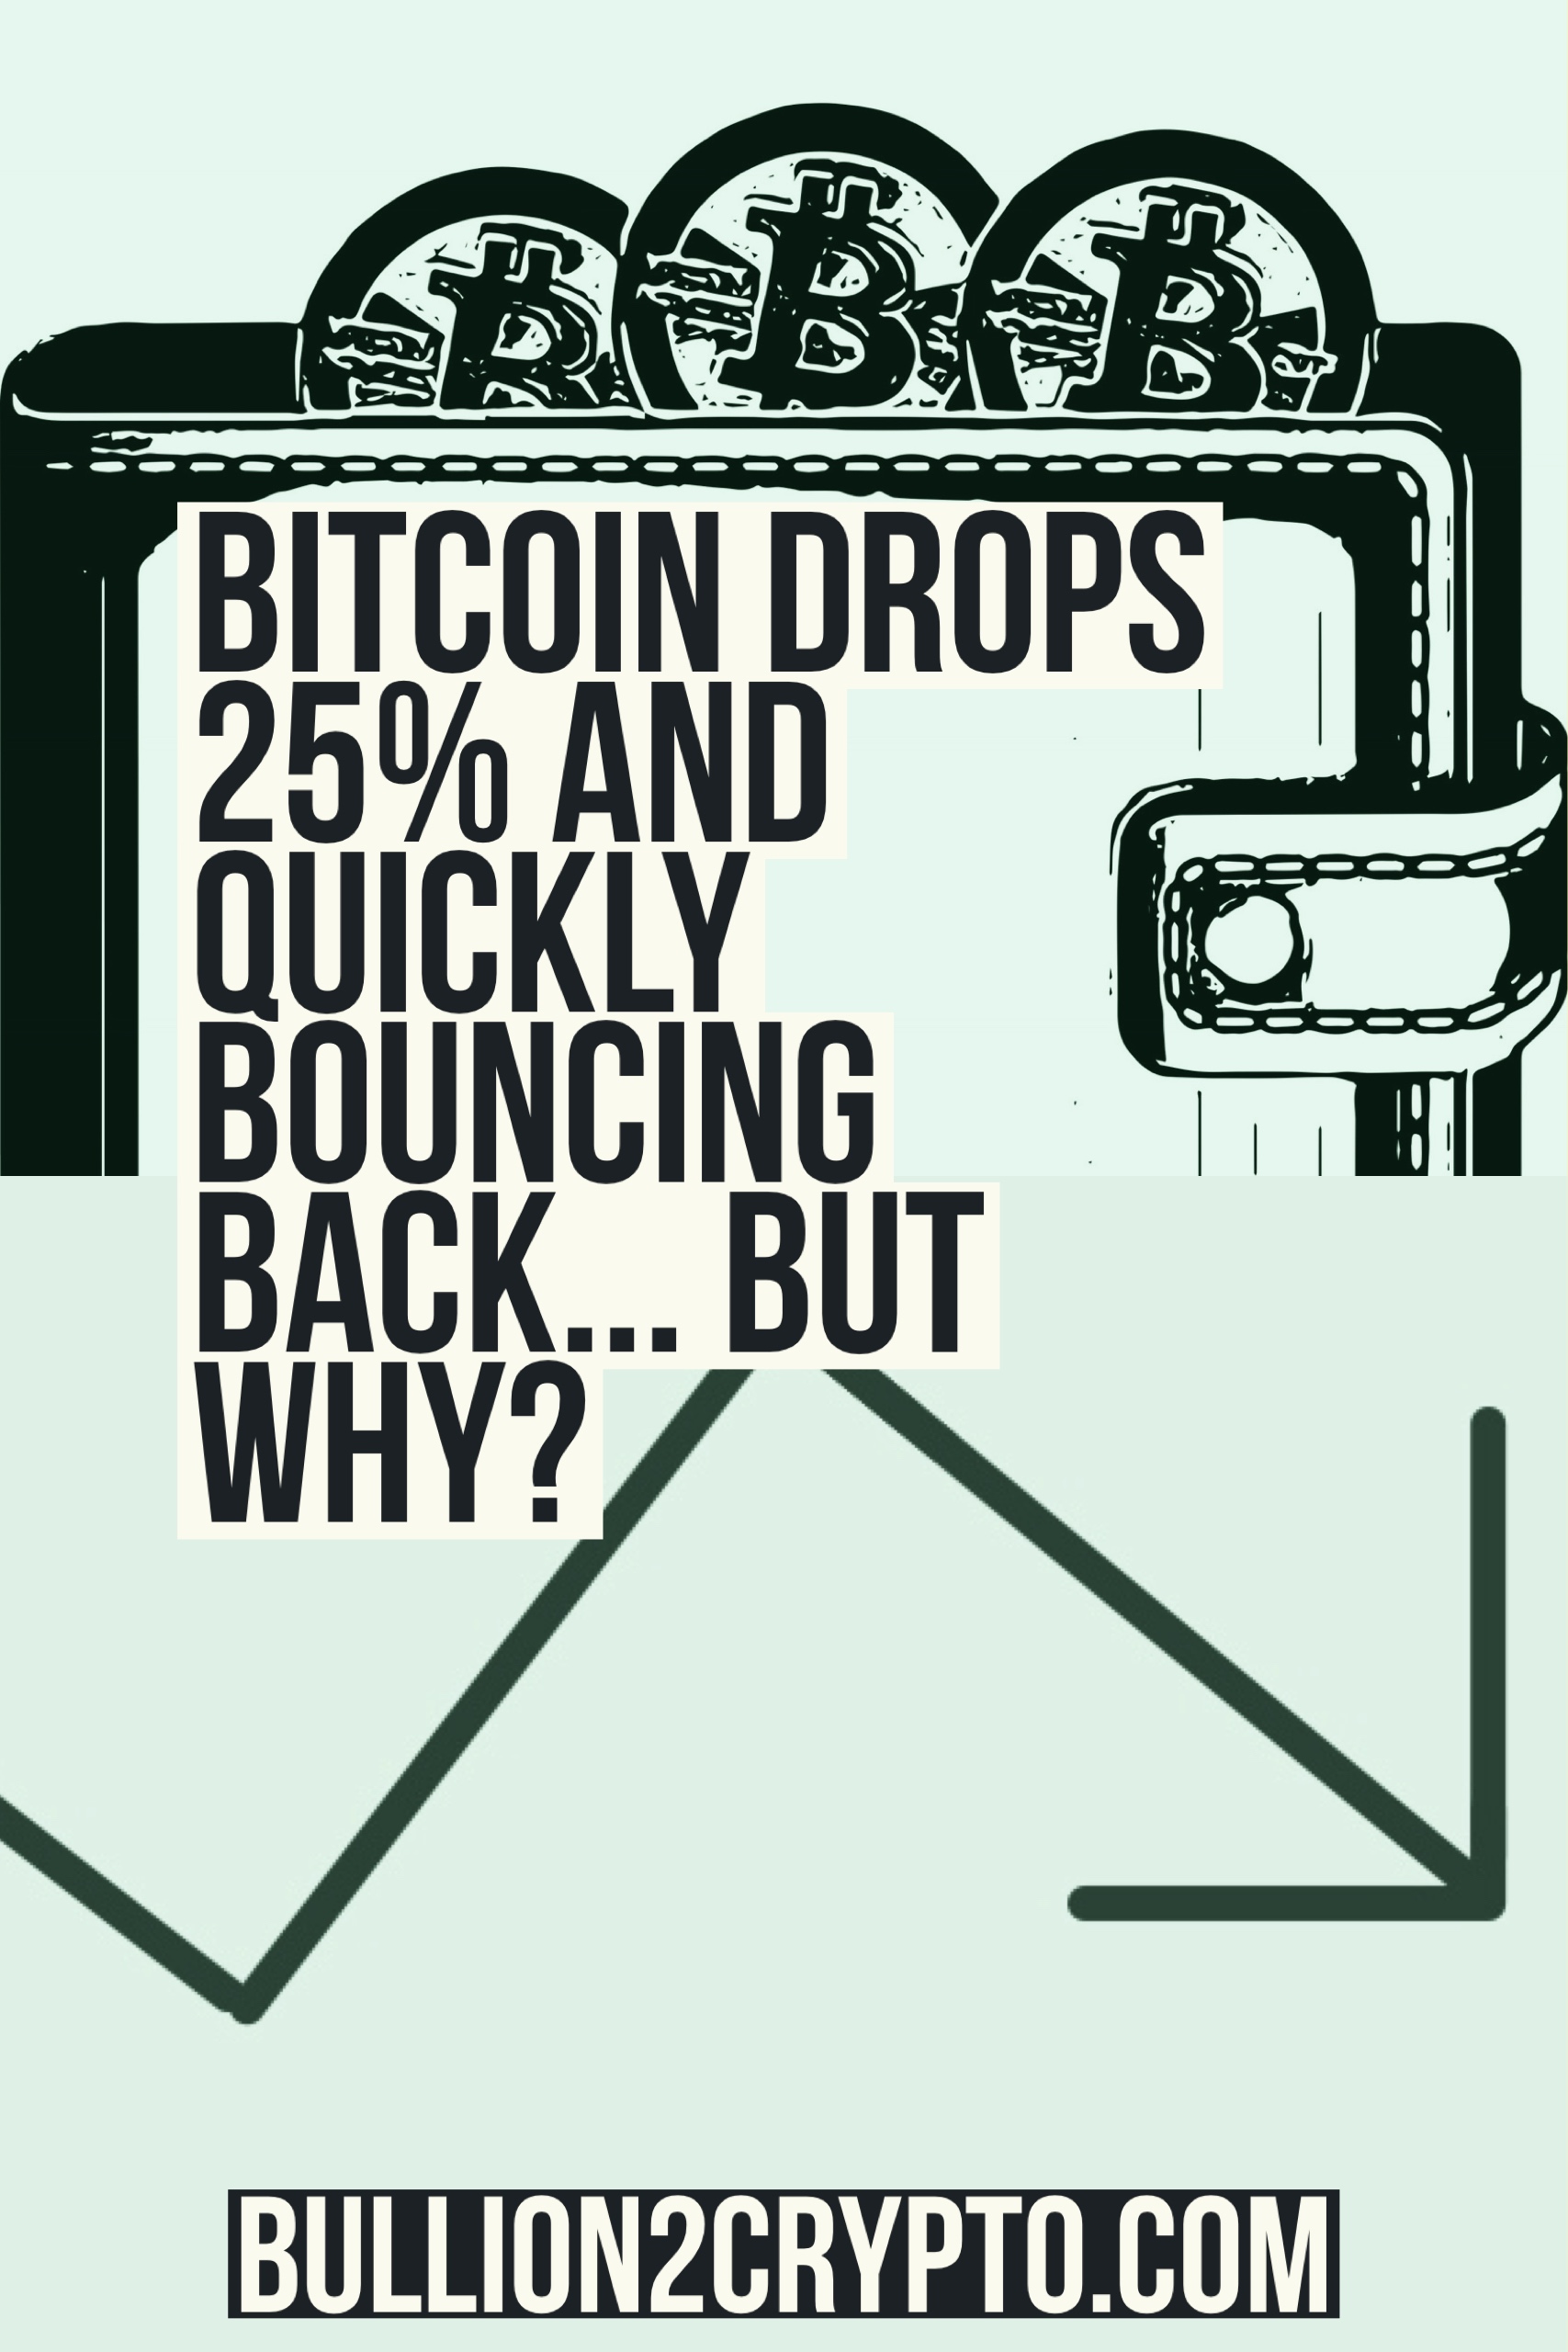 Why did bitcoin prce drop?